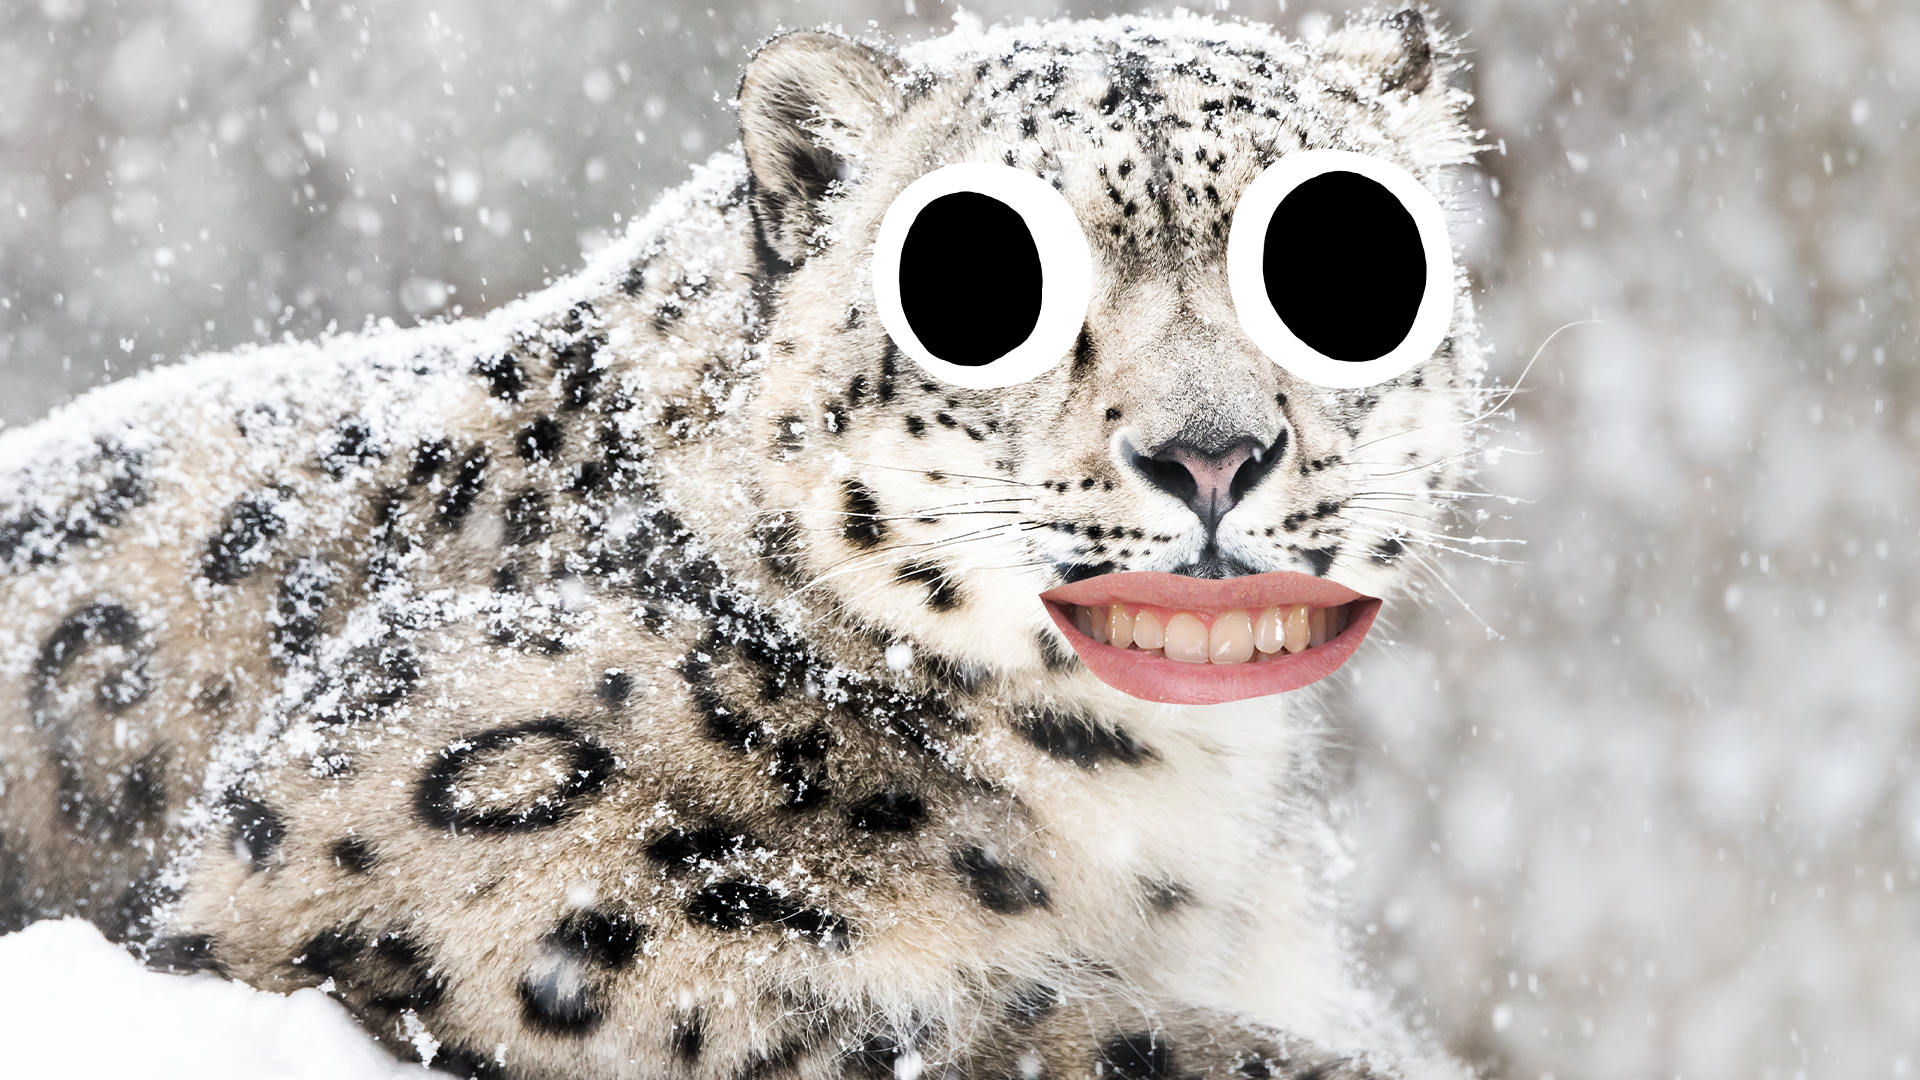 A derpy snow leopard